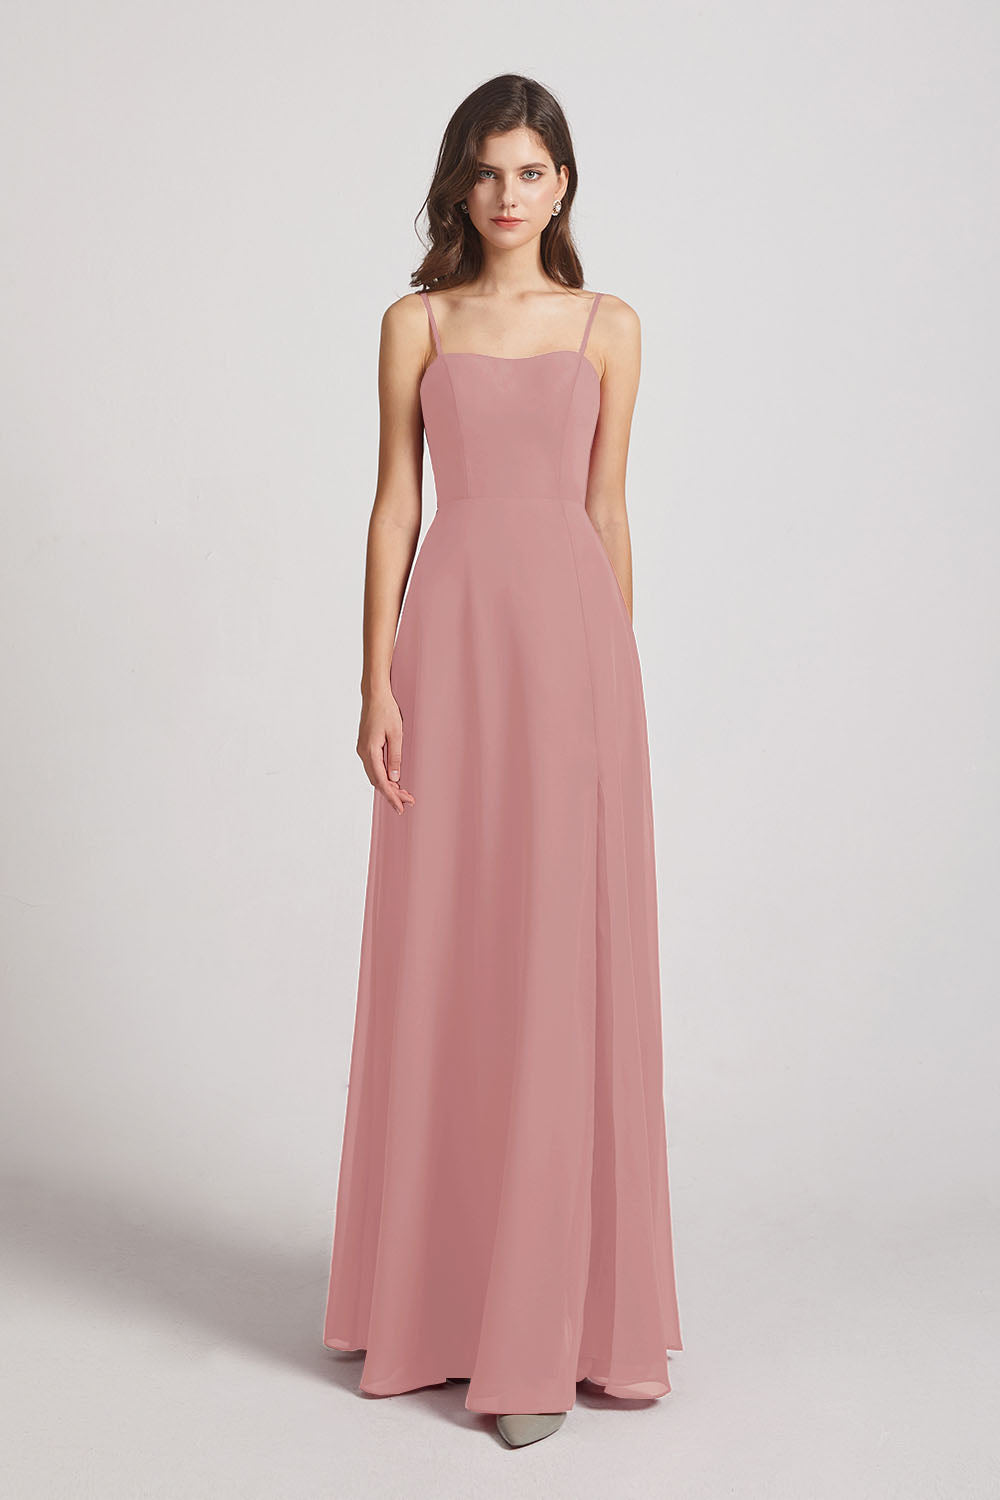 Alfa Bridal Dusty Pink Spaghetti Straps Long Chiffon Bridesmaid Dresses with Side Slit (AF0112)